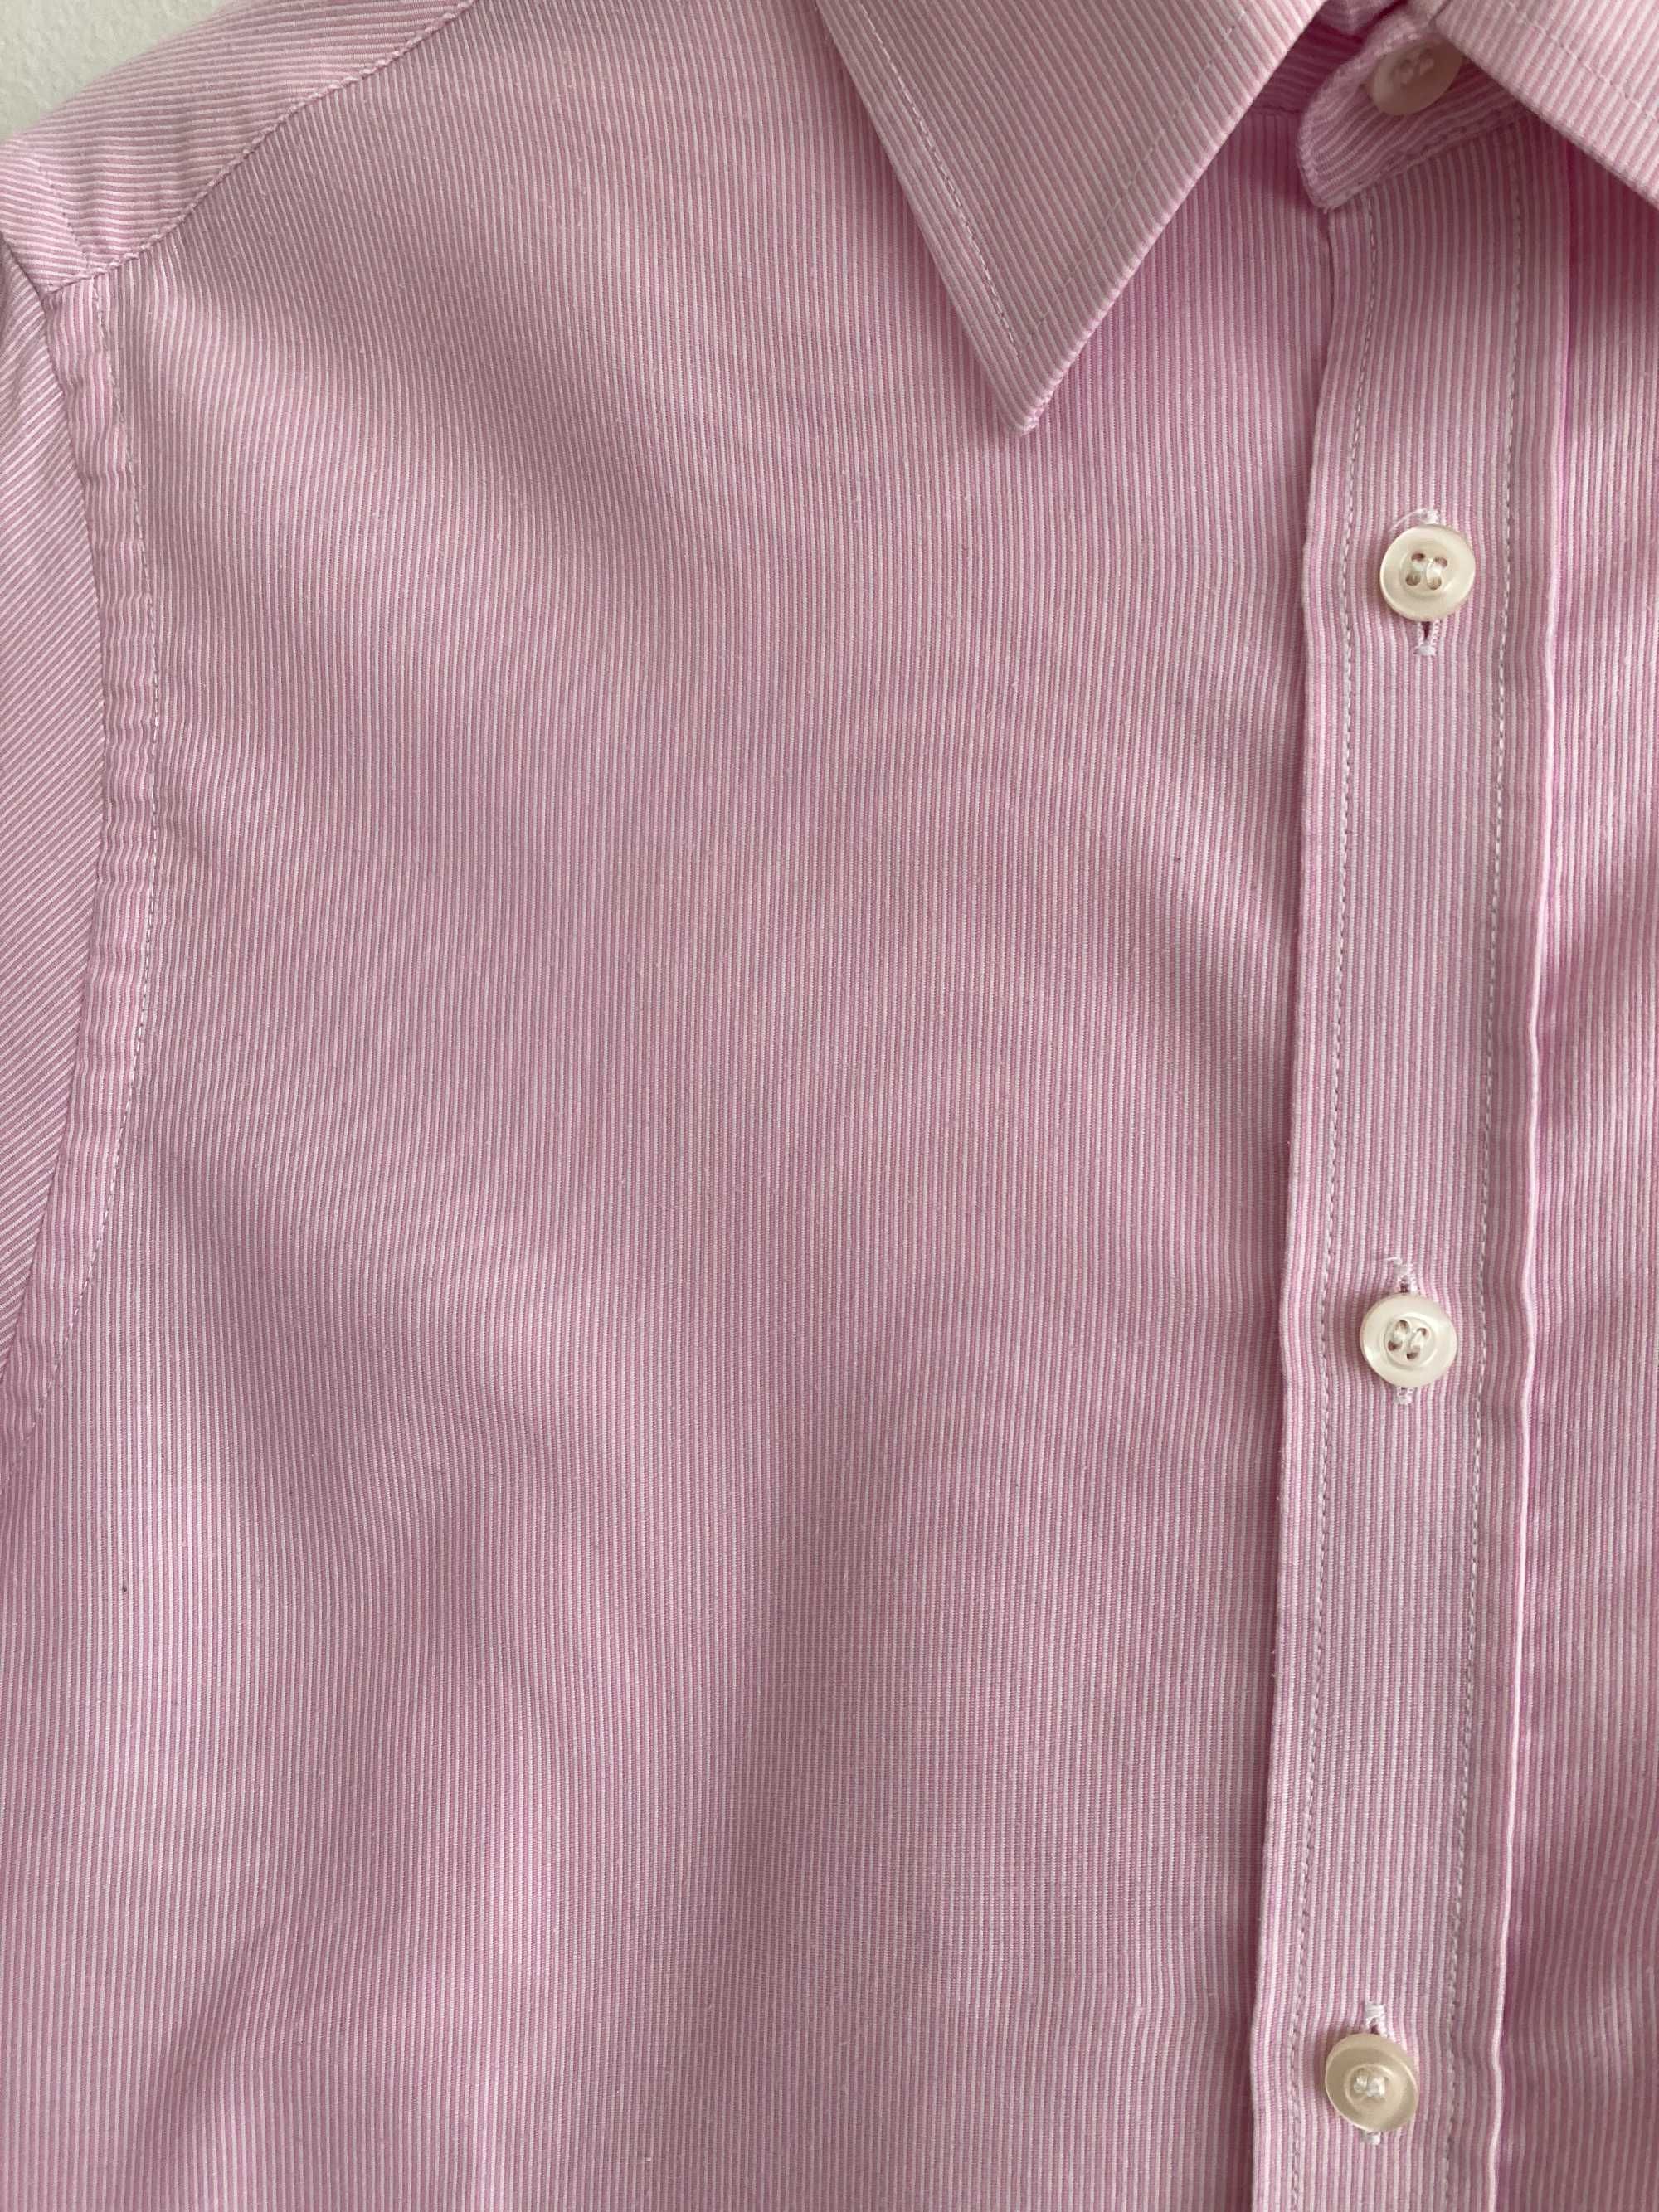 różowa koszula męska - Burton UK - 43 XL - super stan